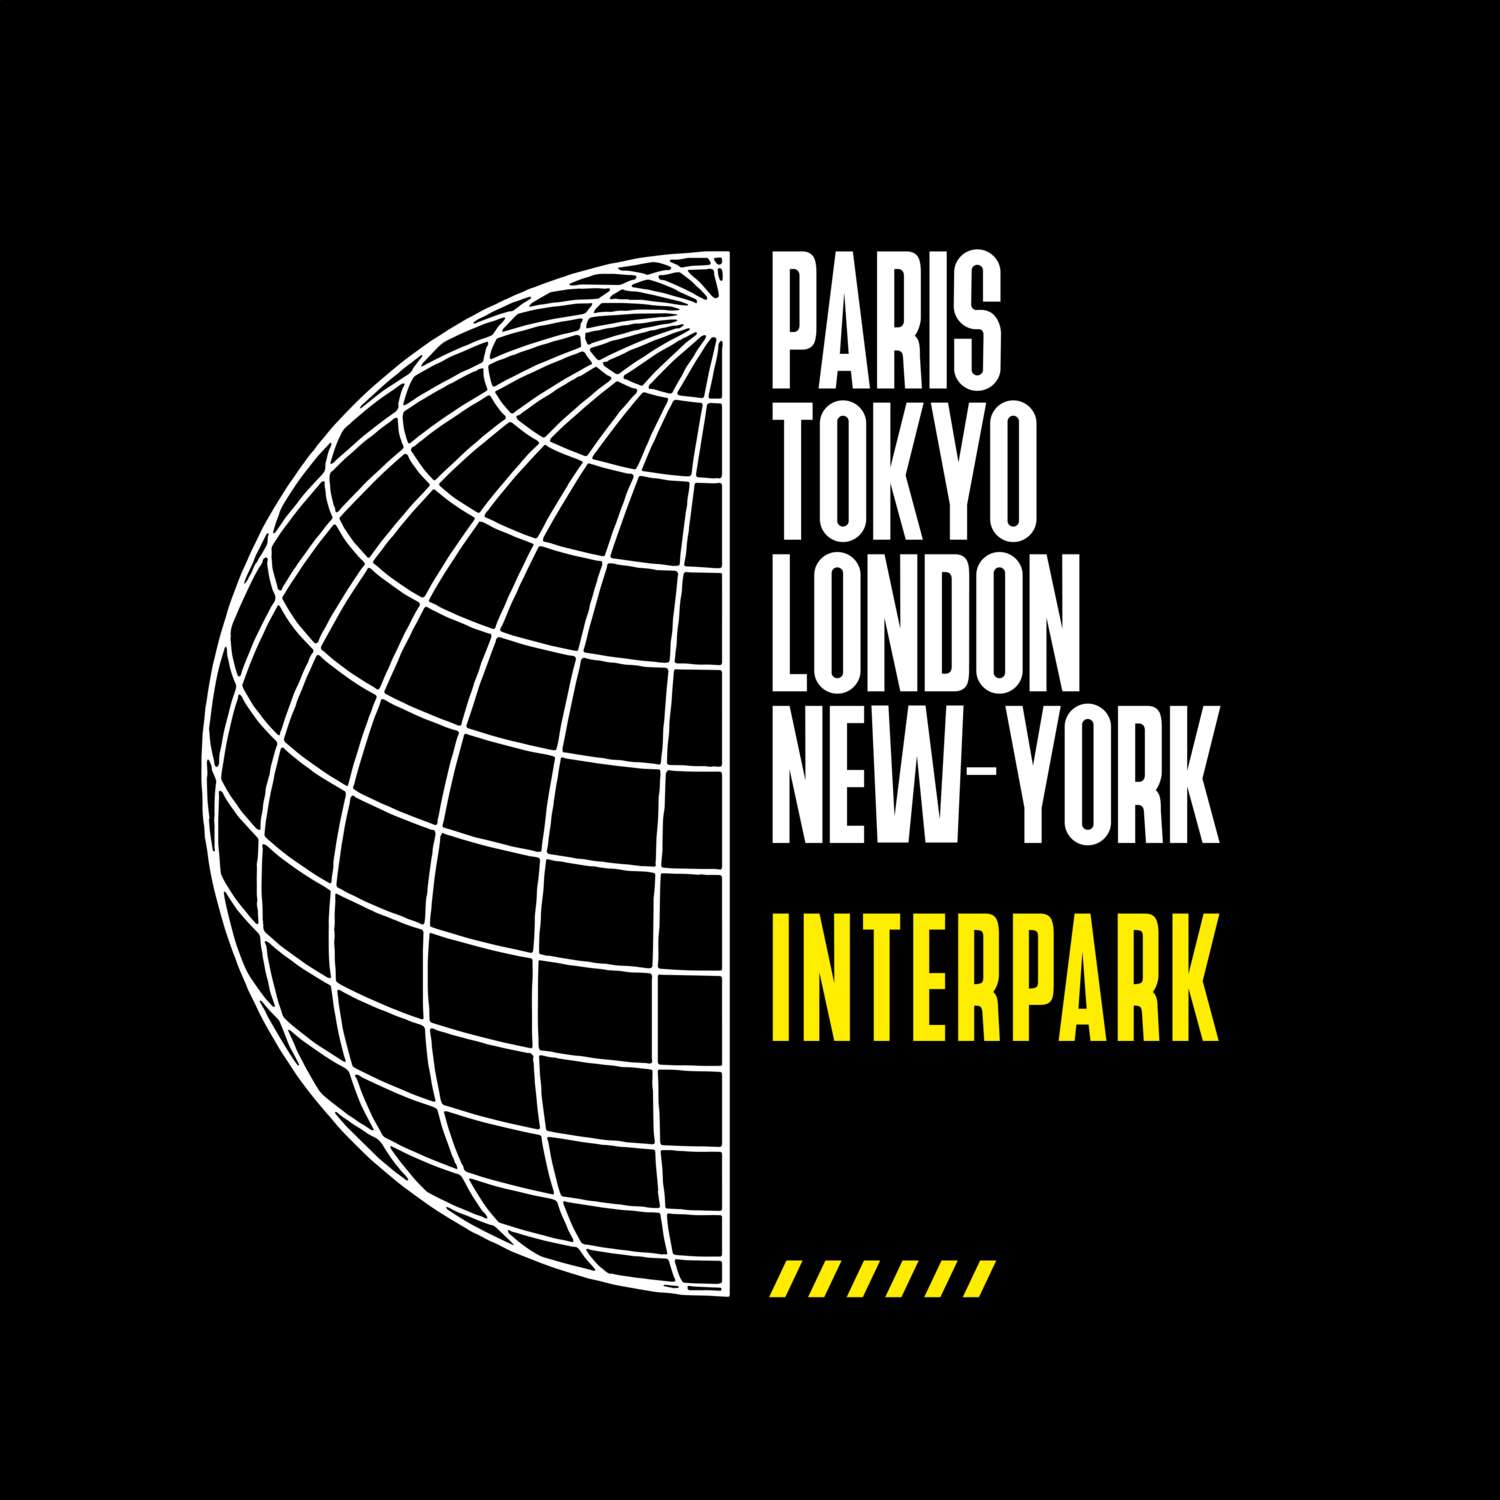 Interpark T-Shirt »Paris Tokyo London«